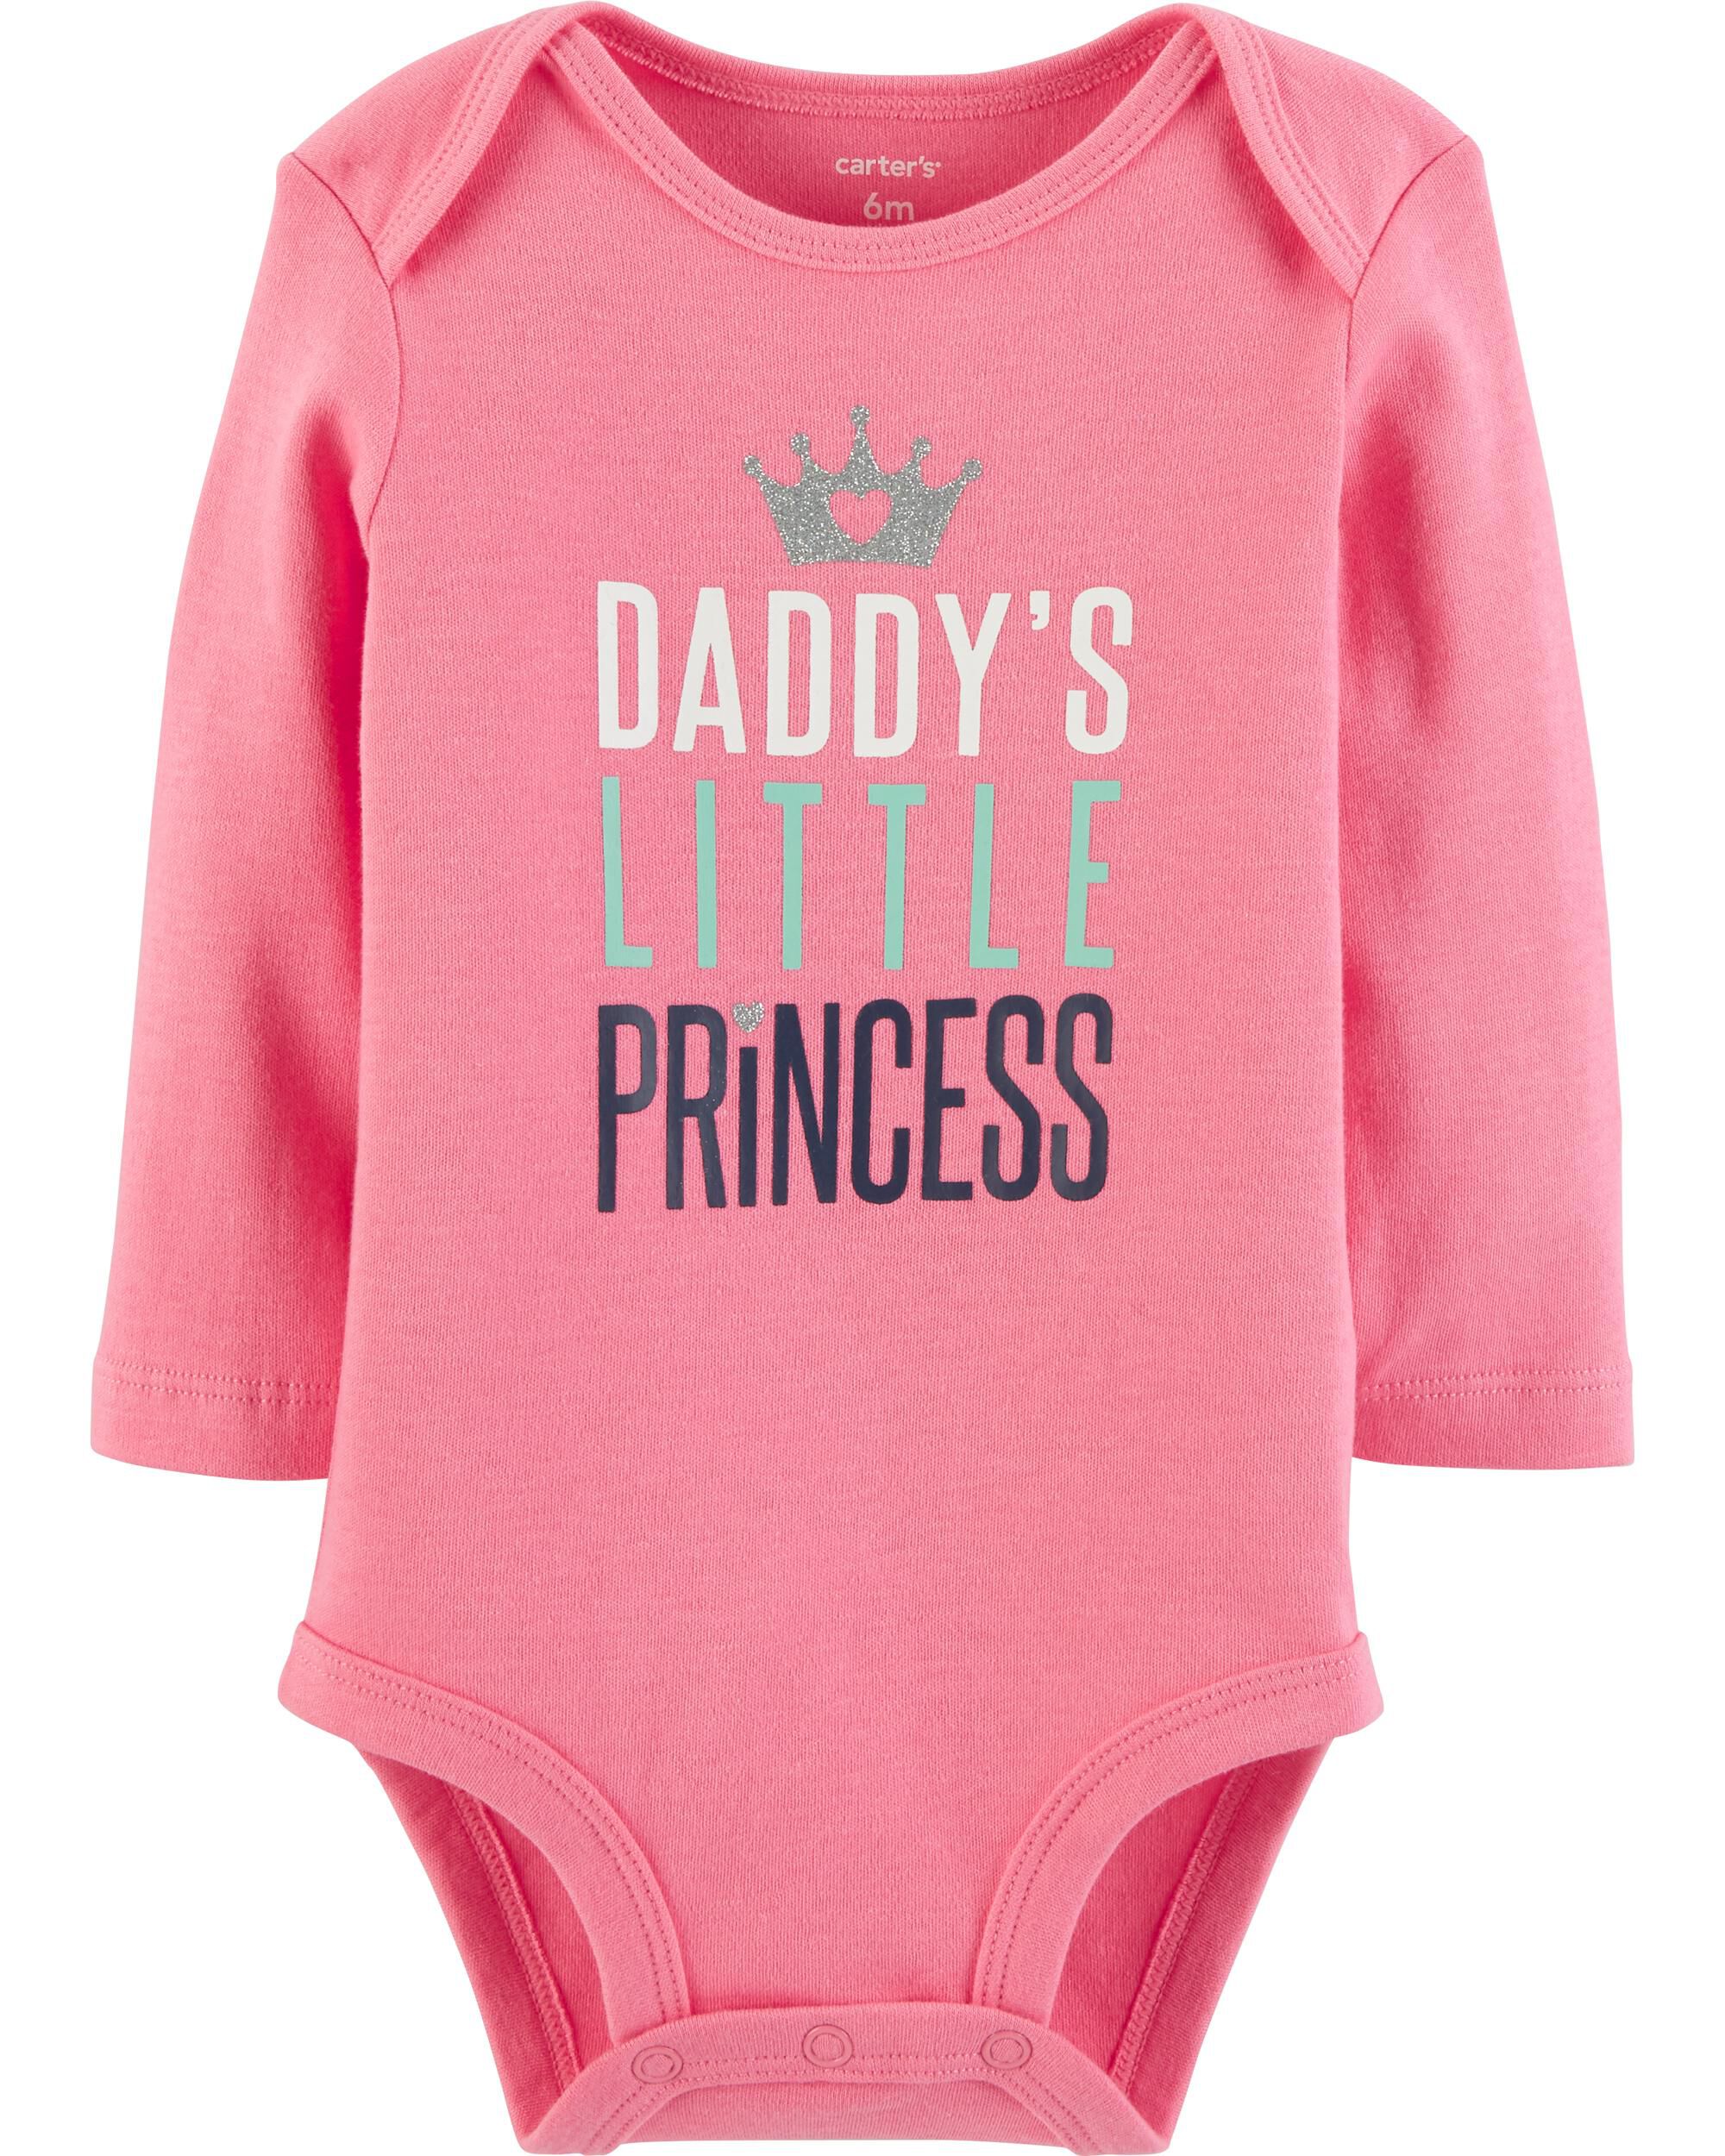 daddy's girl newborn clothes